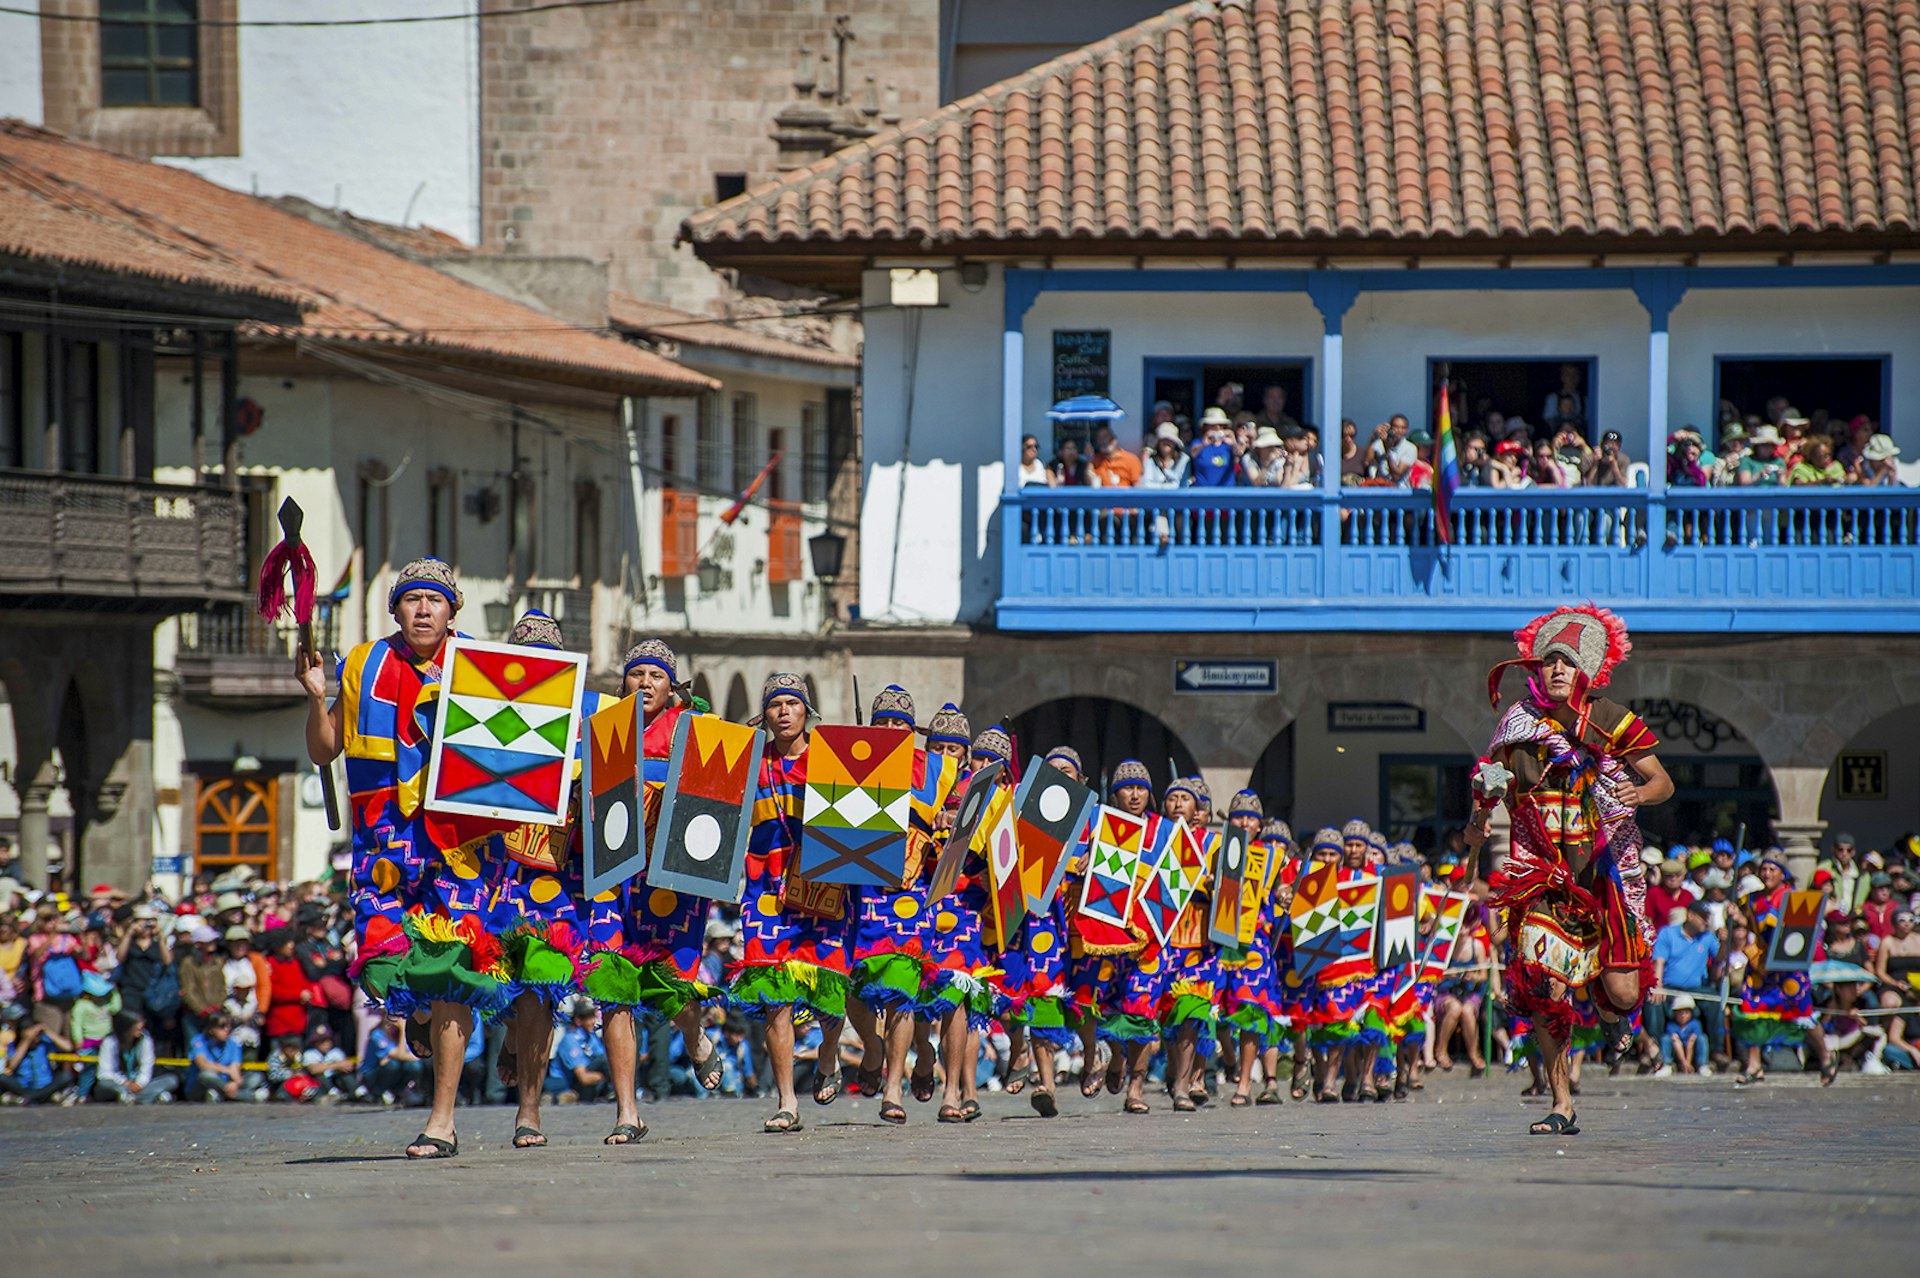 Inti Raymi: the most important festival of the Inca Empire